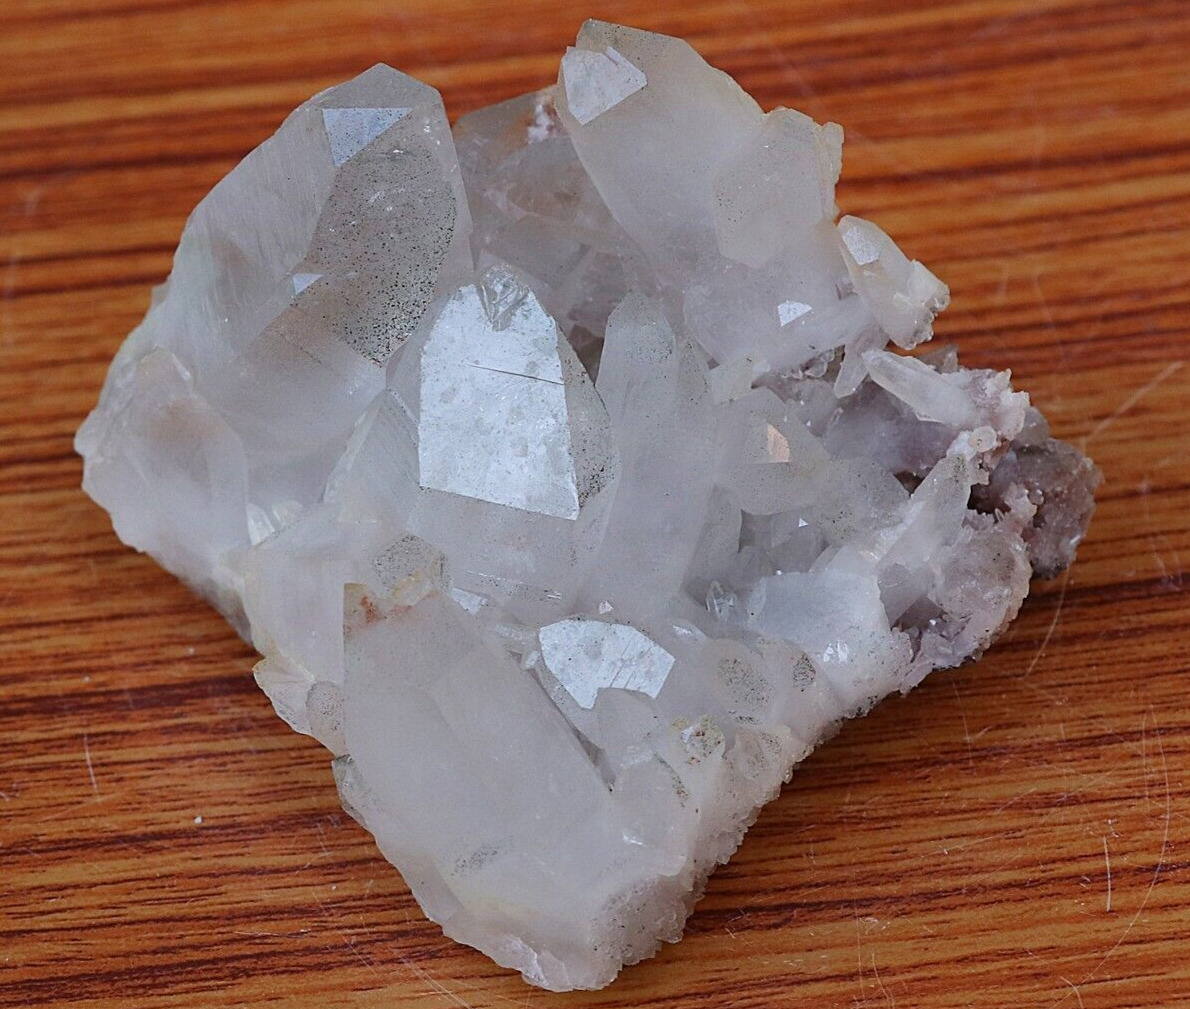 392 Gm SUPERB Rare White Samadhi Quartz Cluster Rough Healing Rocks Minerals